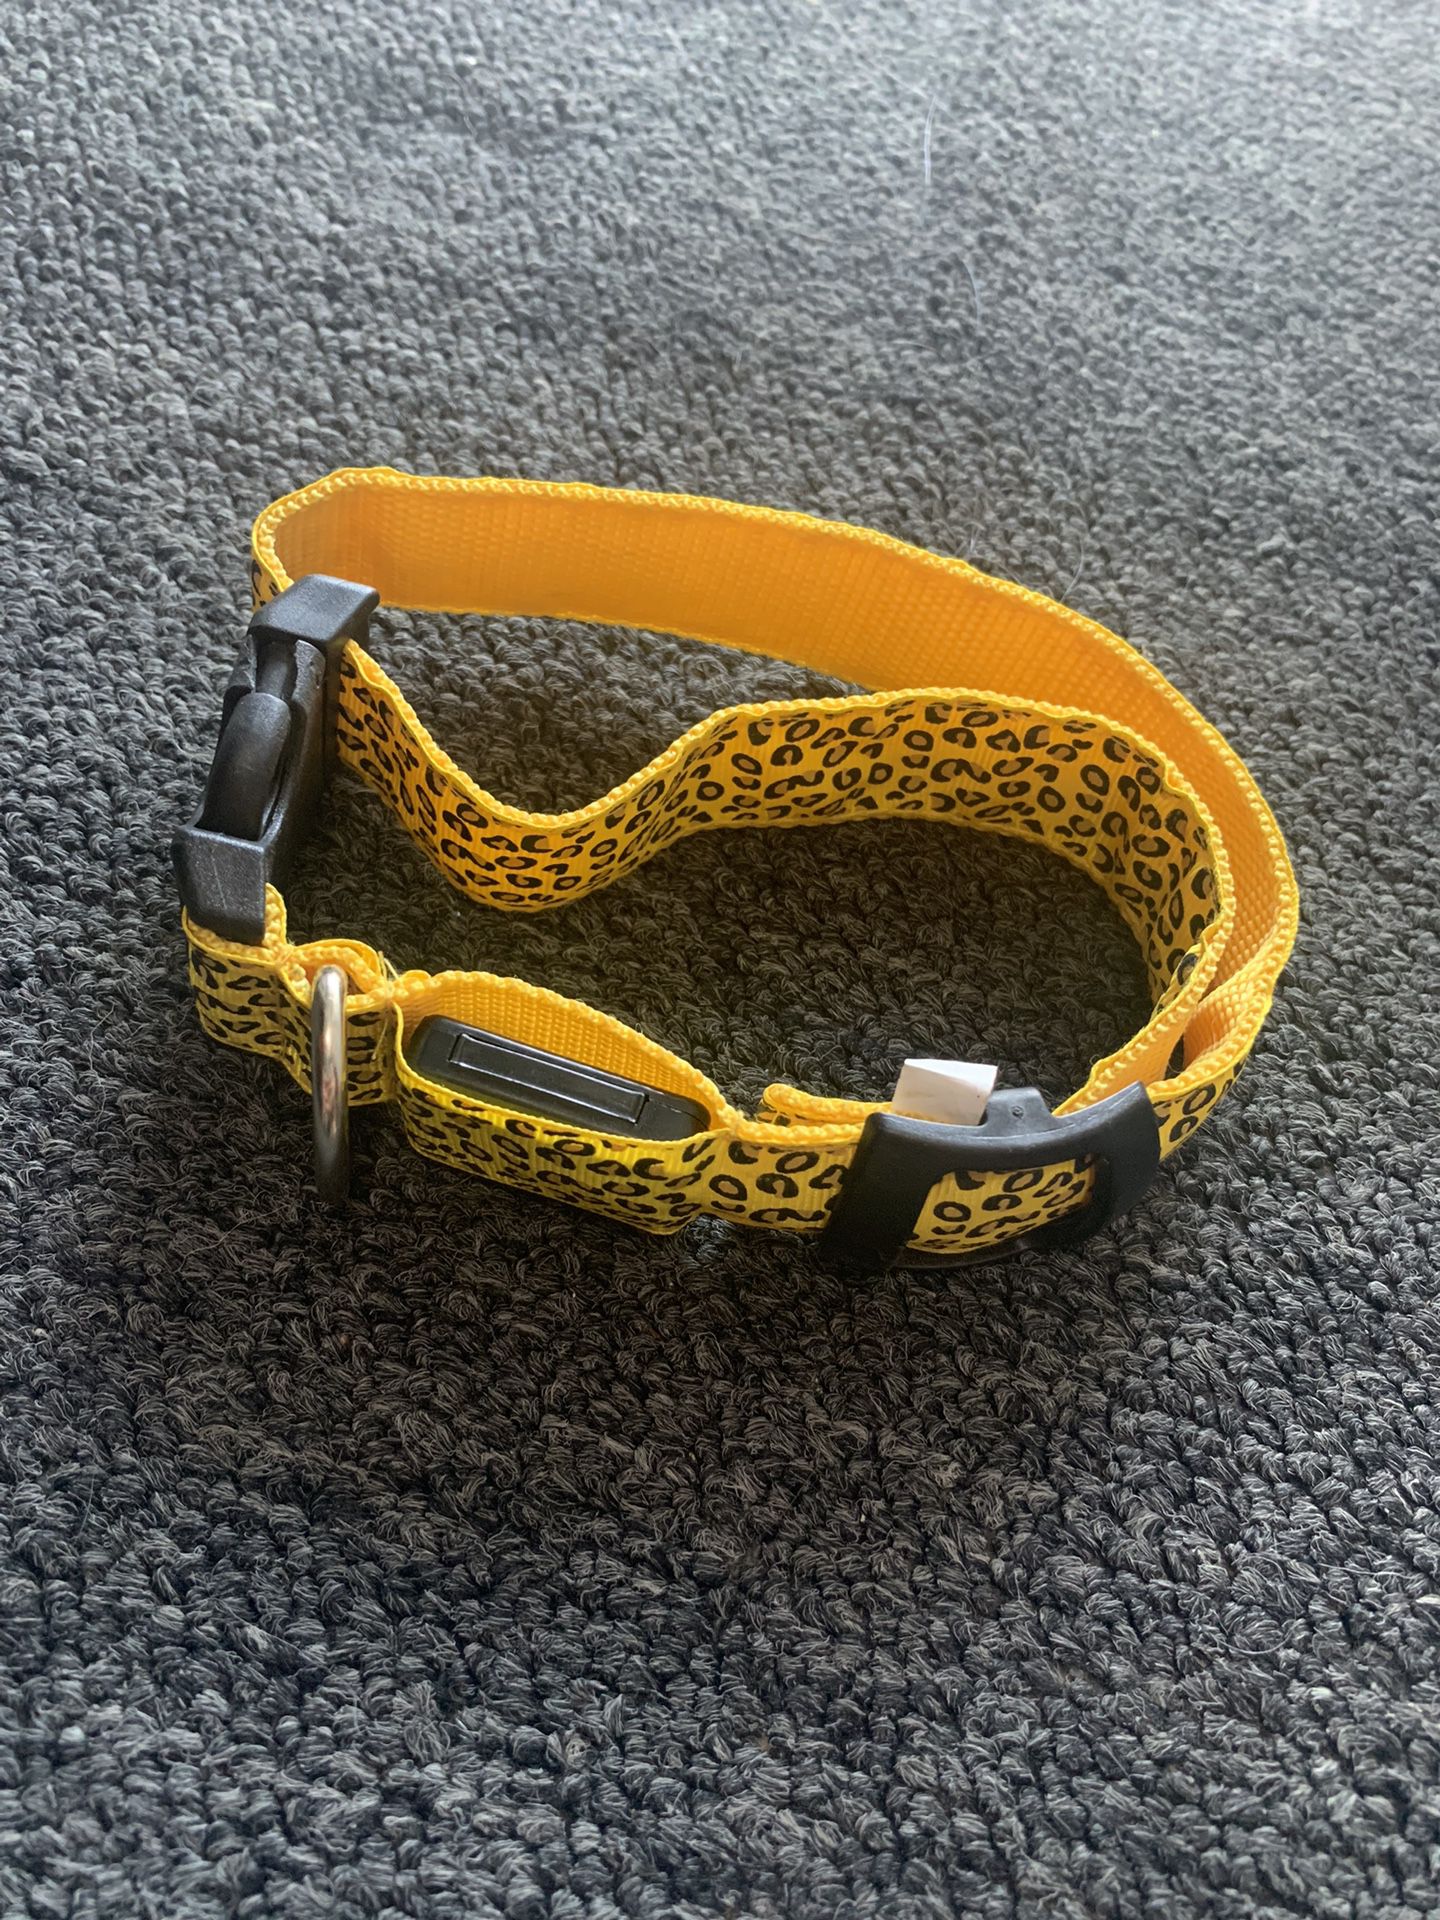 (Free) Light Up Dog Collar - Cheetah Print